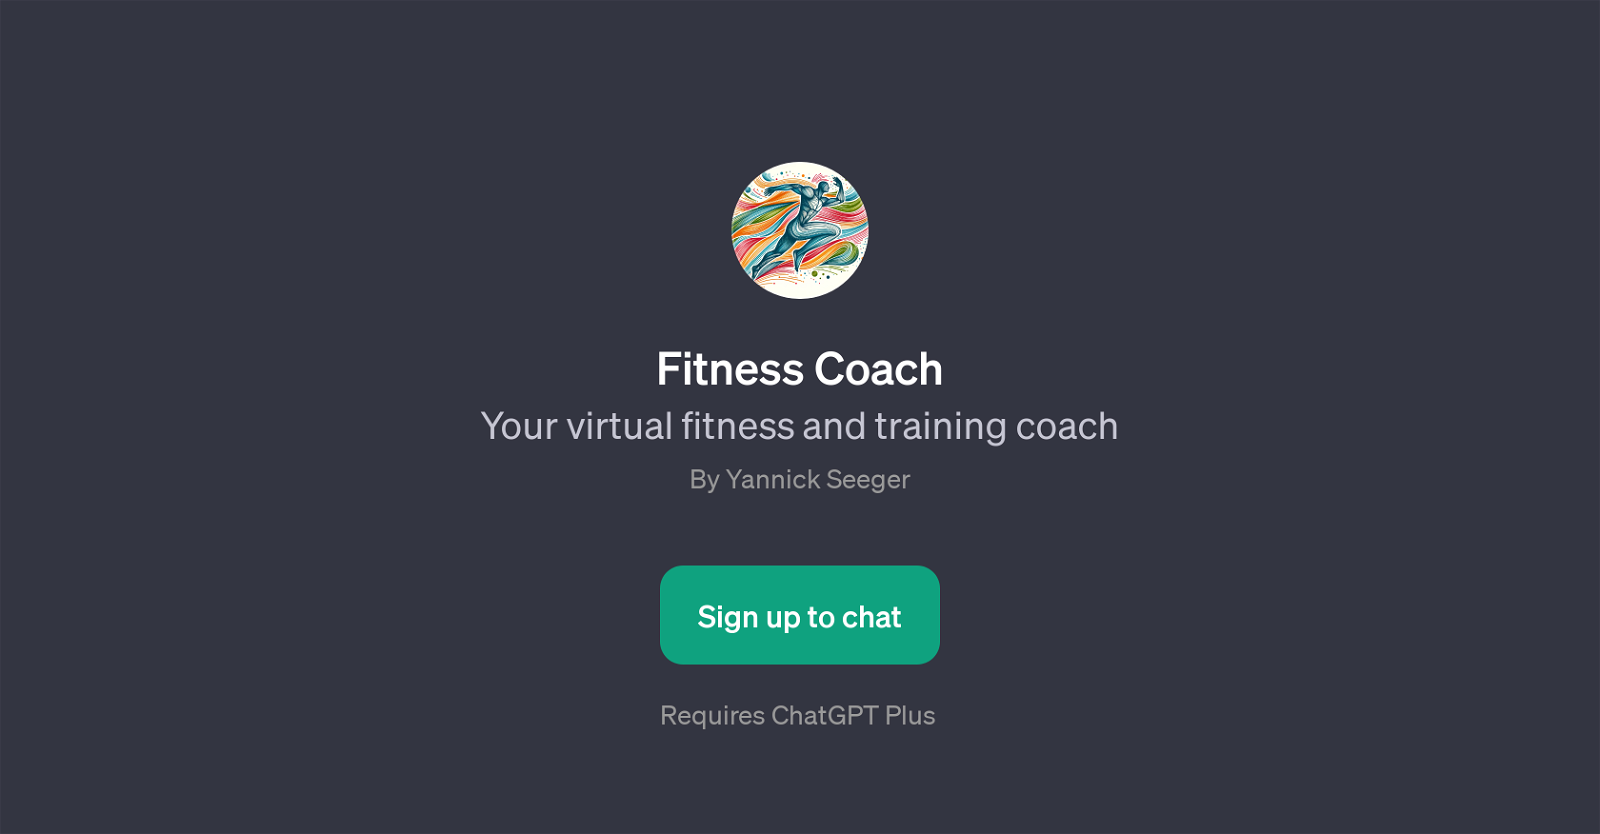 Fitness Coach website